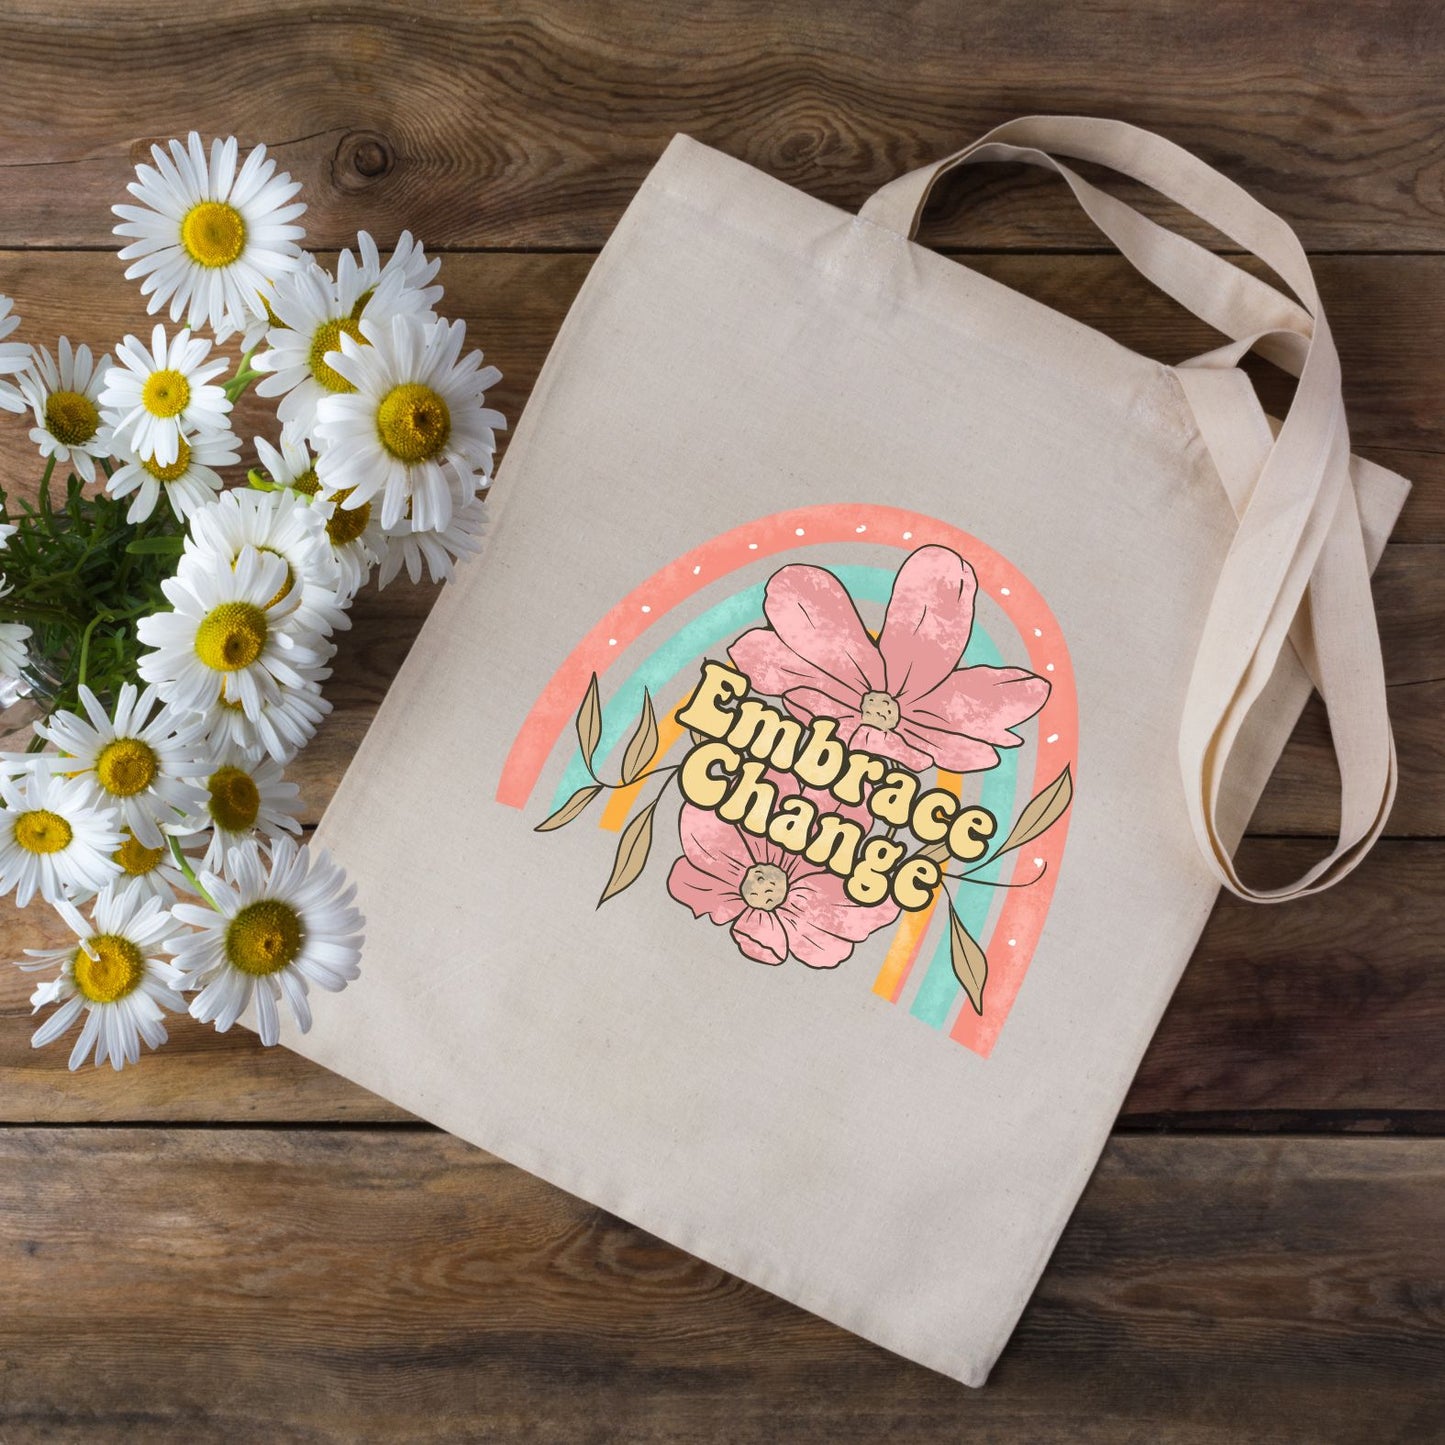 Shopping bag aesthetic 100% cotone naturale | Mod. Embrace